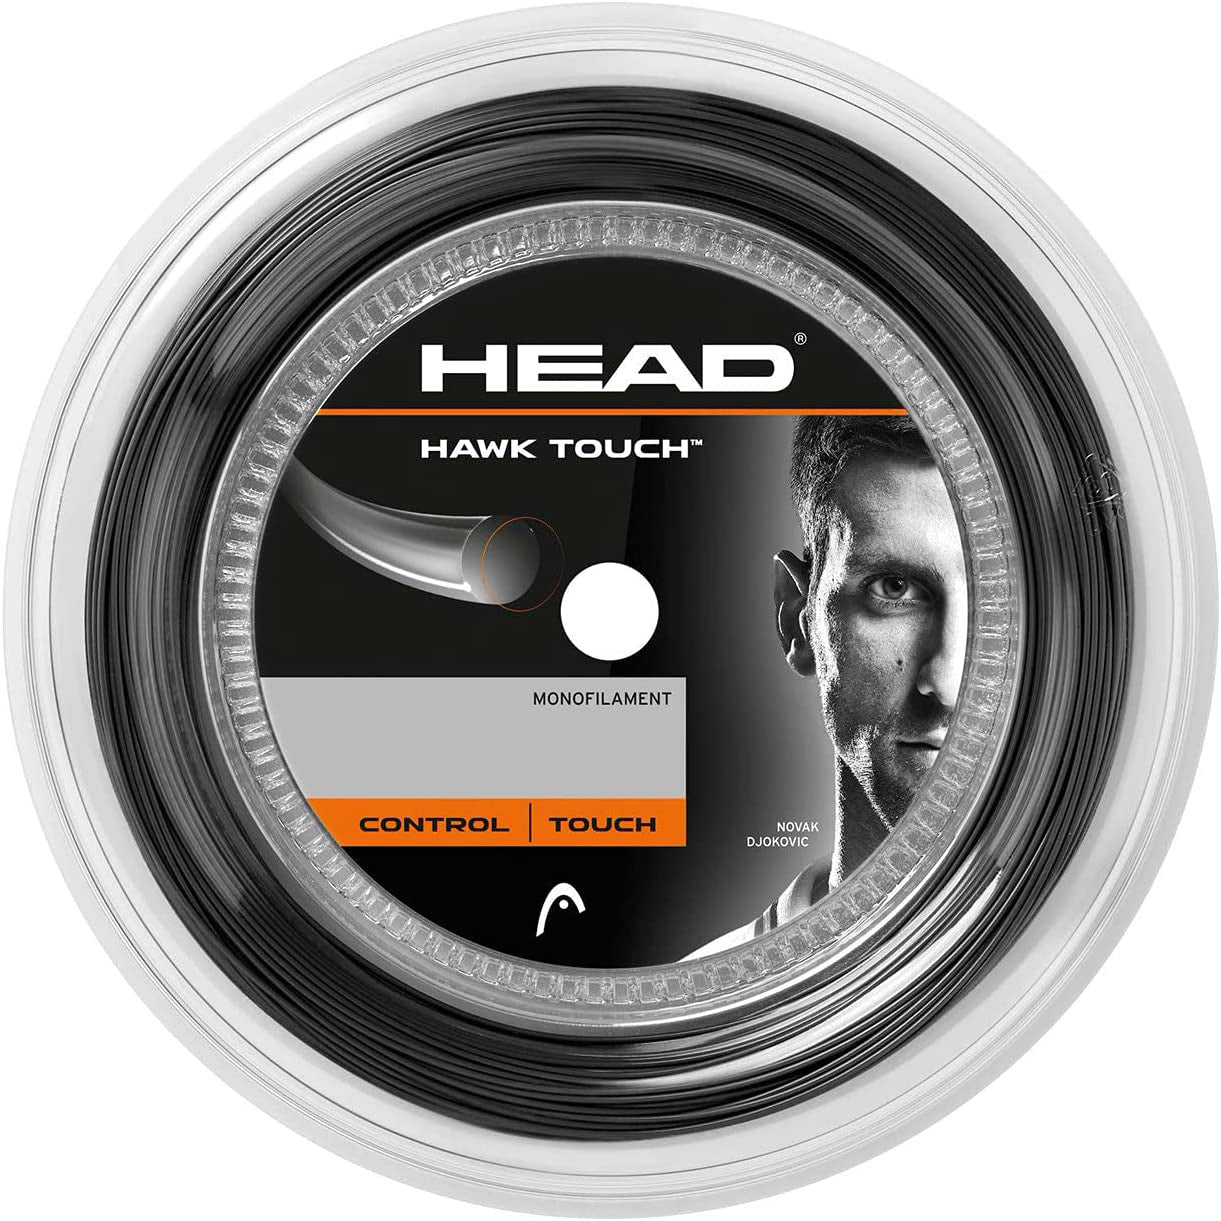 Head Head Rip Control Tennis String Reels (200m)